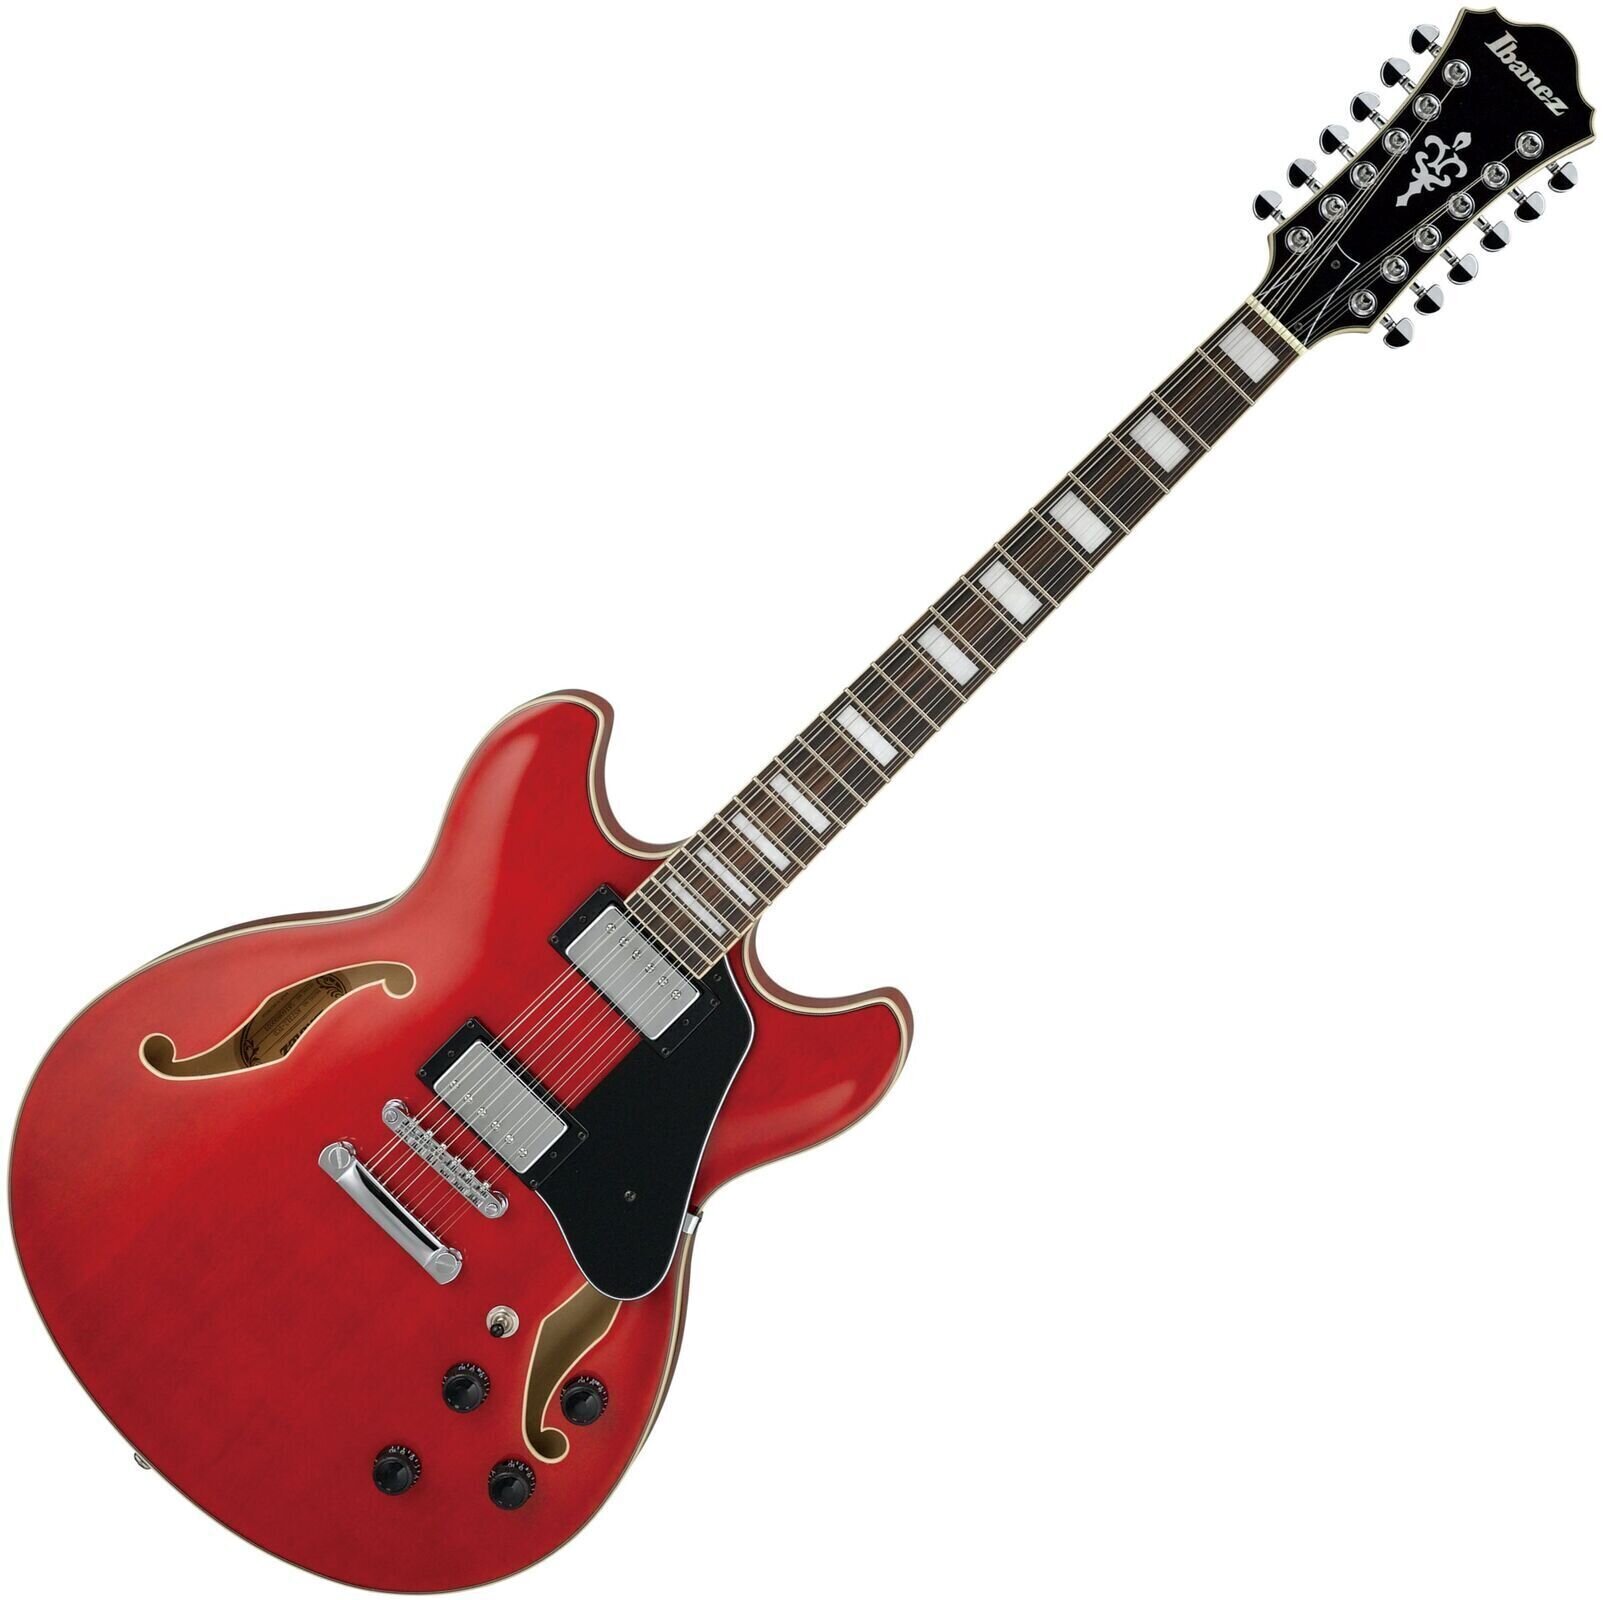 Semiakustická kytara Ibanez AS7312-TCD Transparent Cherry Red (Poškozeno)